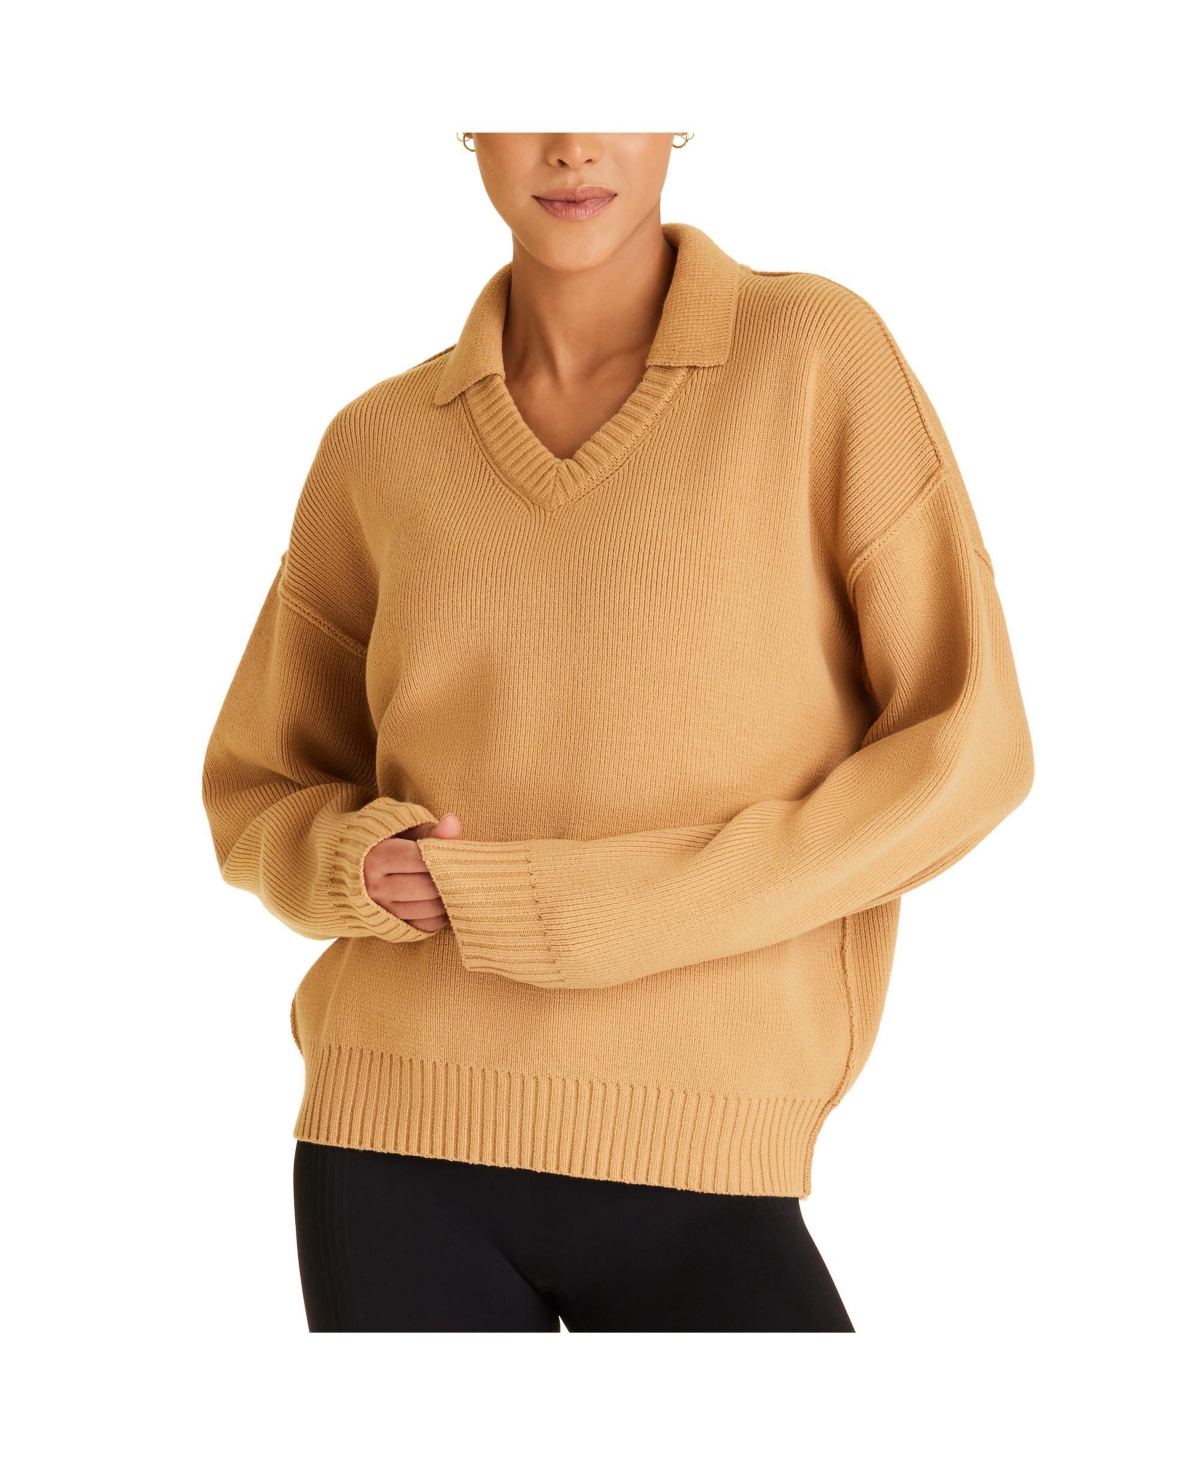 Adult Women Diana Sweater - Camel